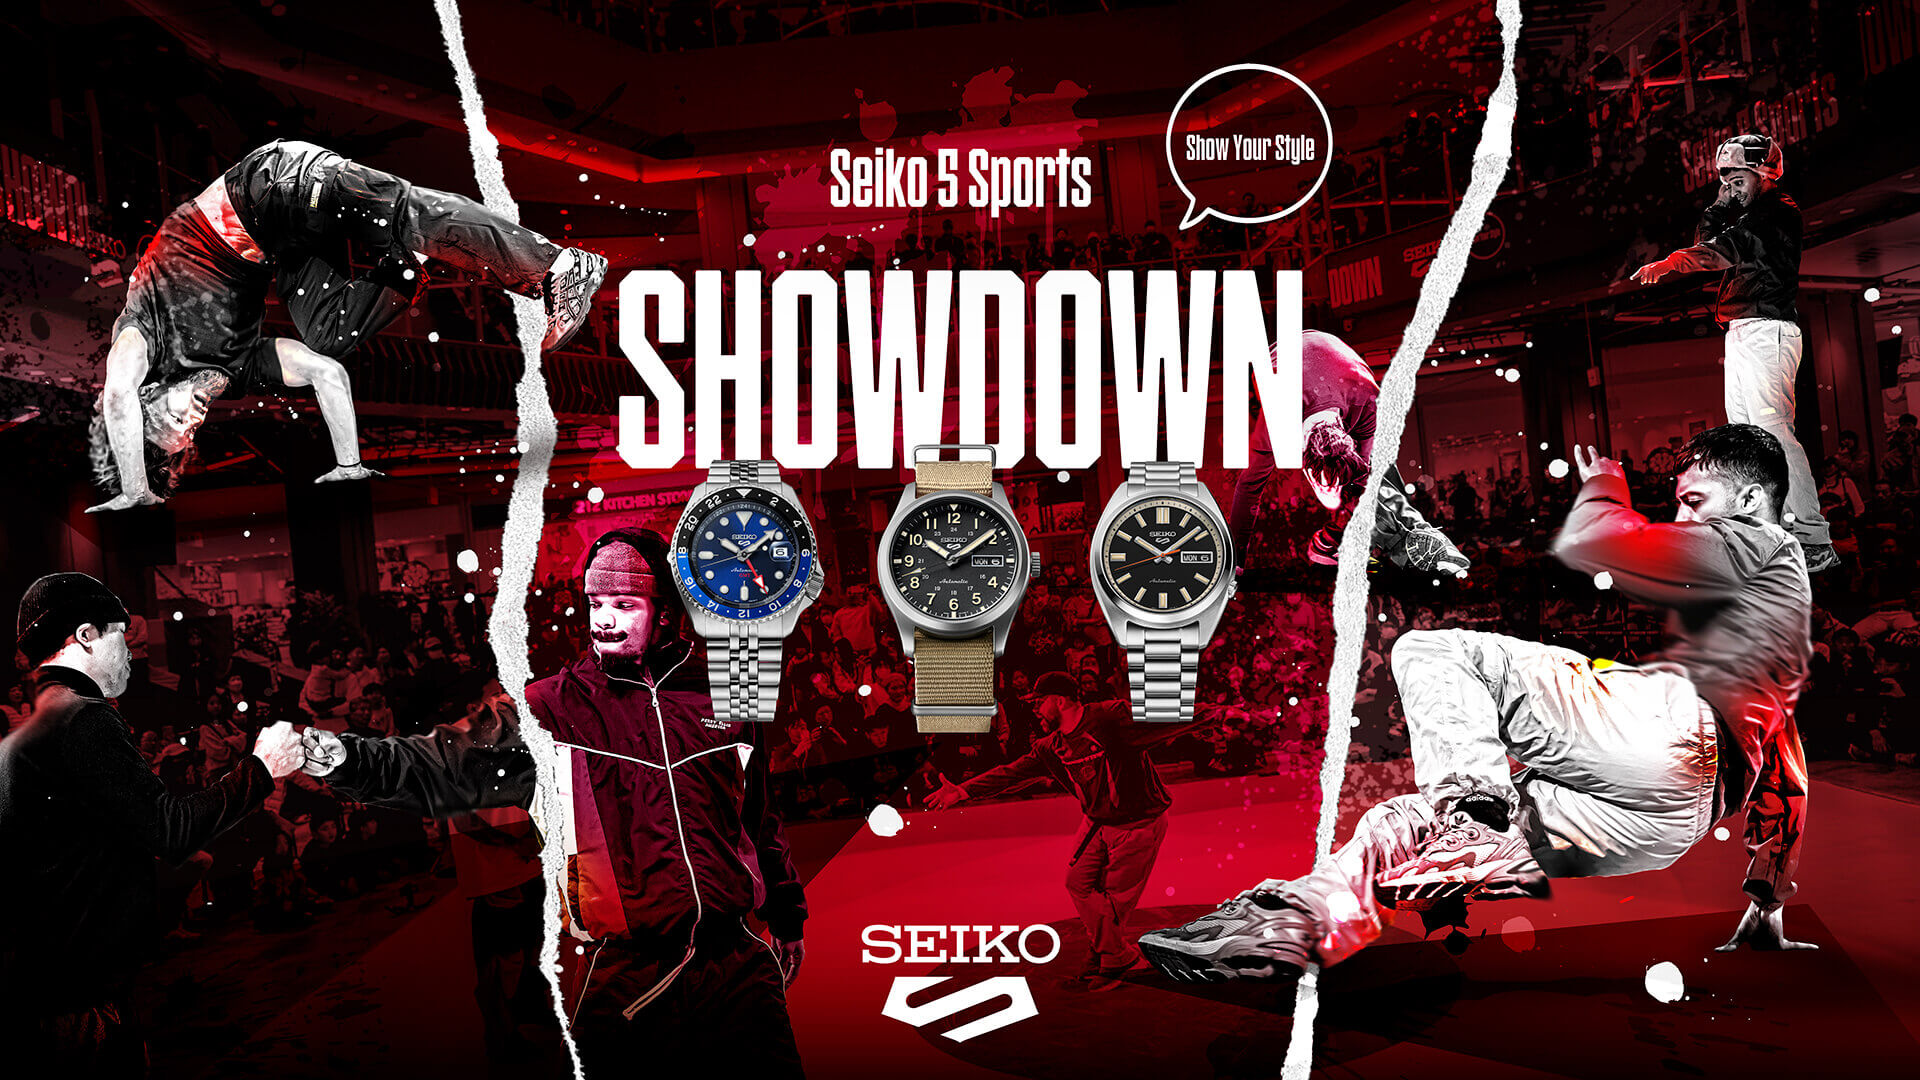 Seiko 5 Sports SHOWDOWN